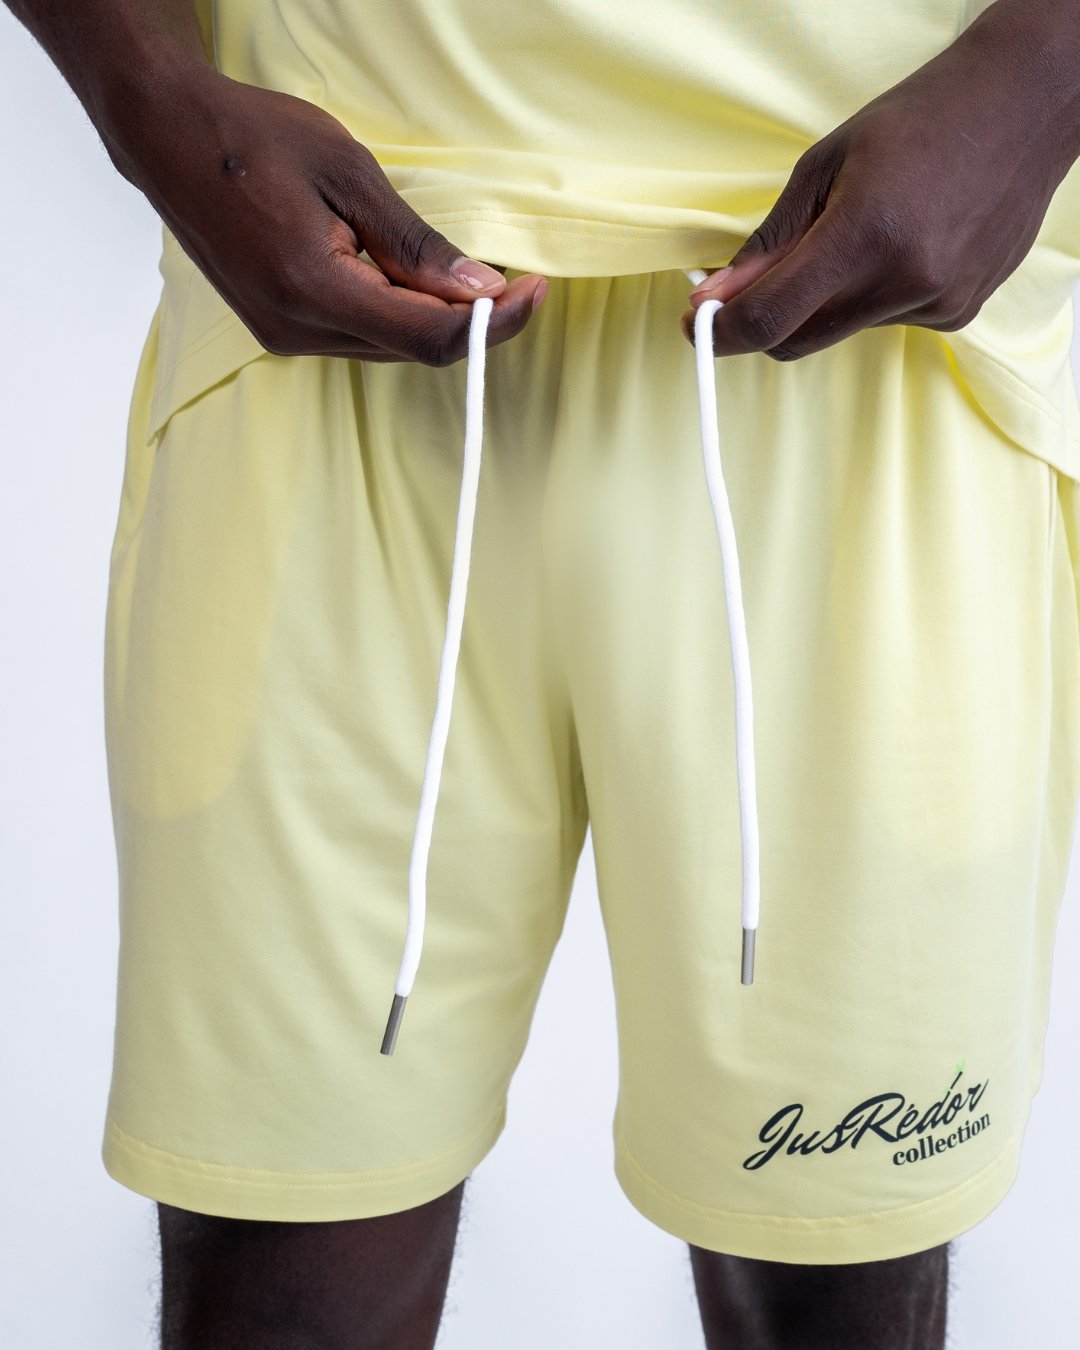 Baseline Bamboo Boi Shorts - JusRédorShorts